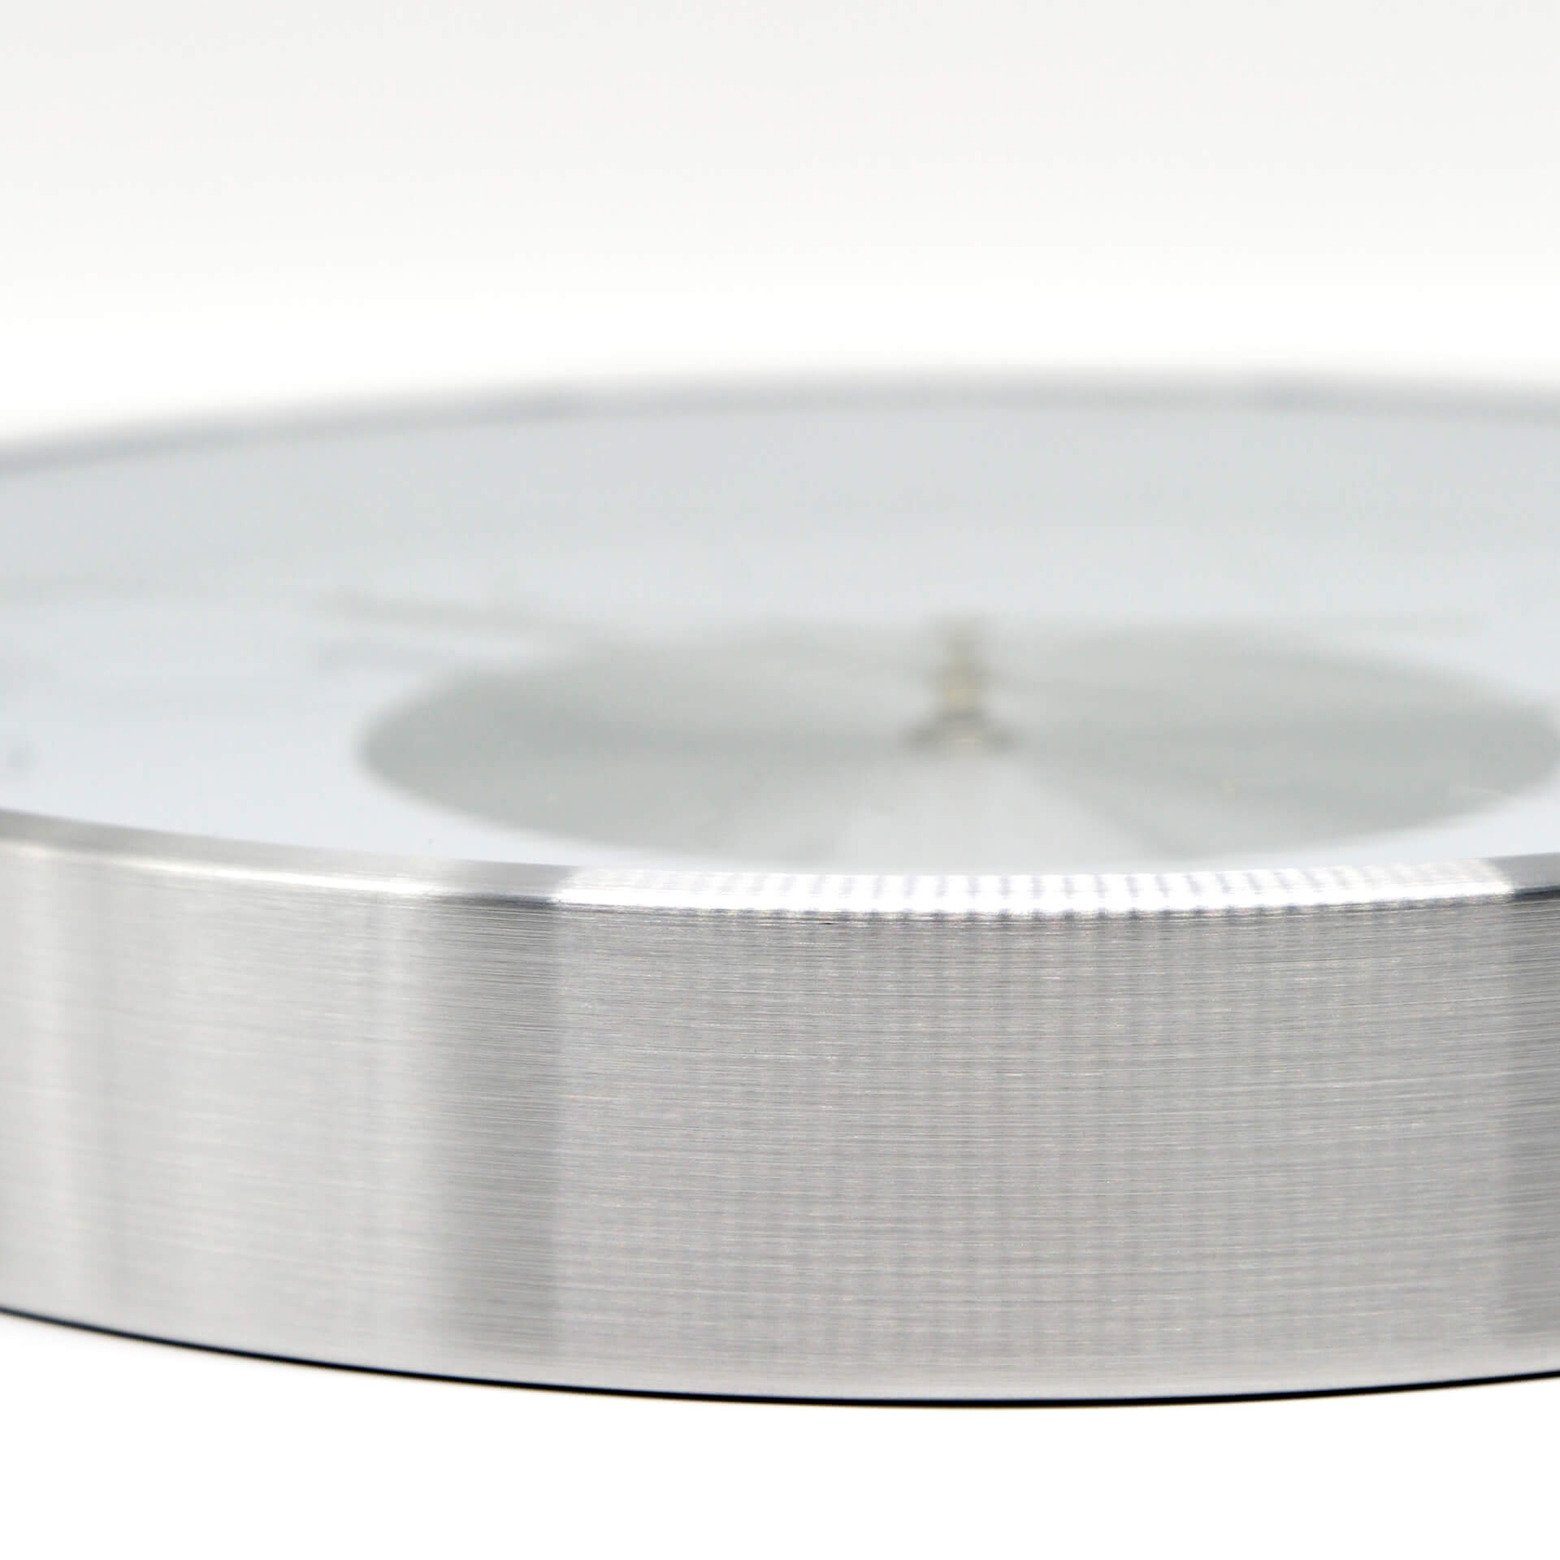 Optik) Aluminium Wanduhr Tick-Geräusche, Silber-Weiß (keine K&L Loft Wall Art Langlebige silber Edelstahl- Uhr Metalluhr Moderne